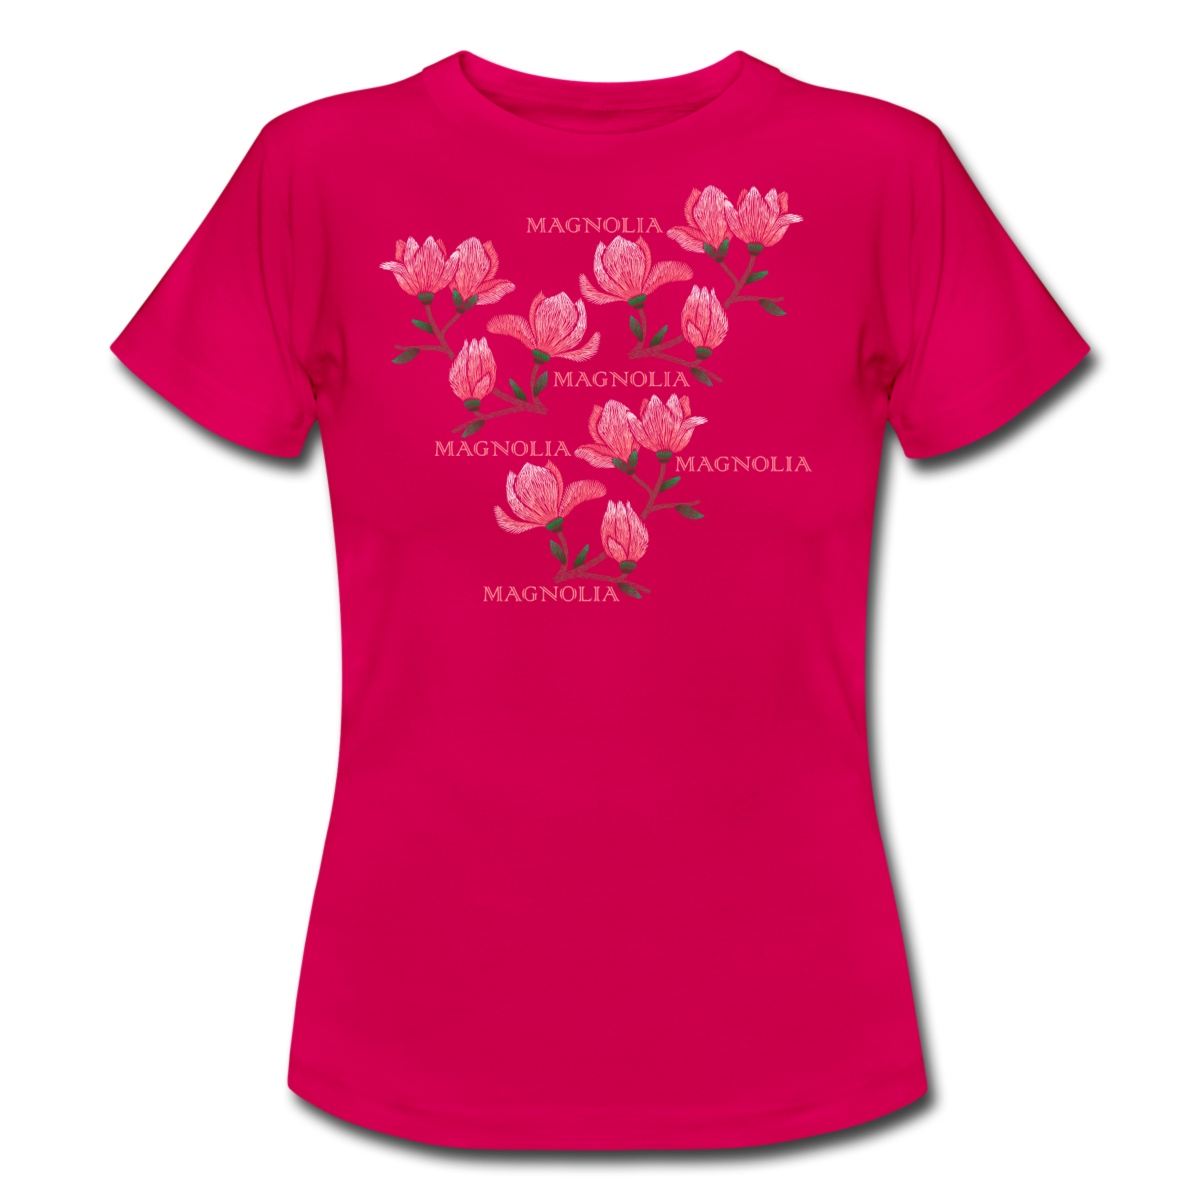 magnolia-t-shirt-dam-c.jpg